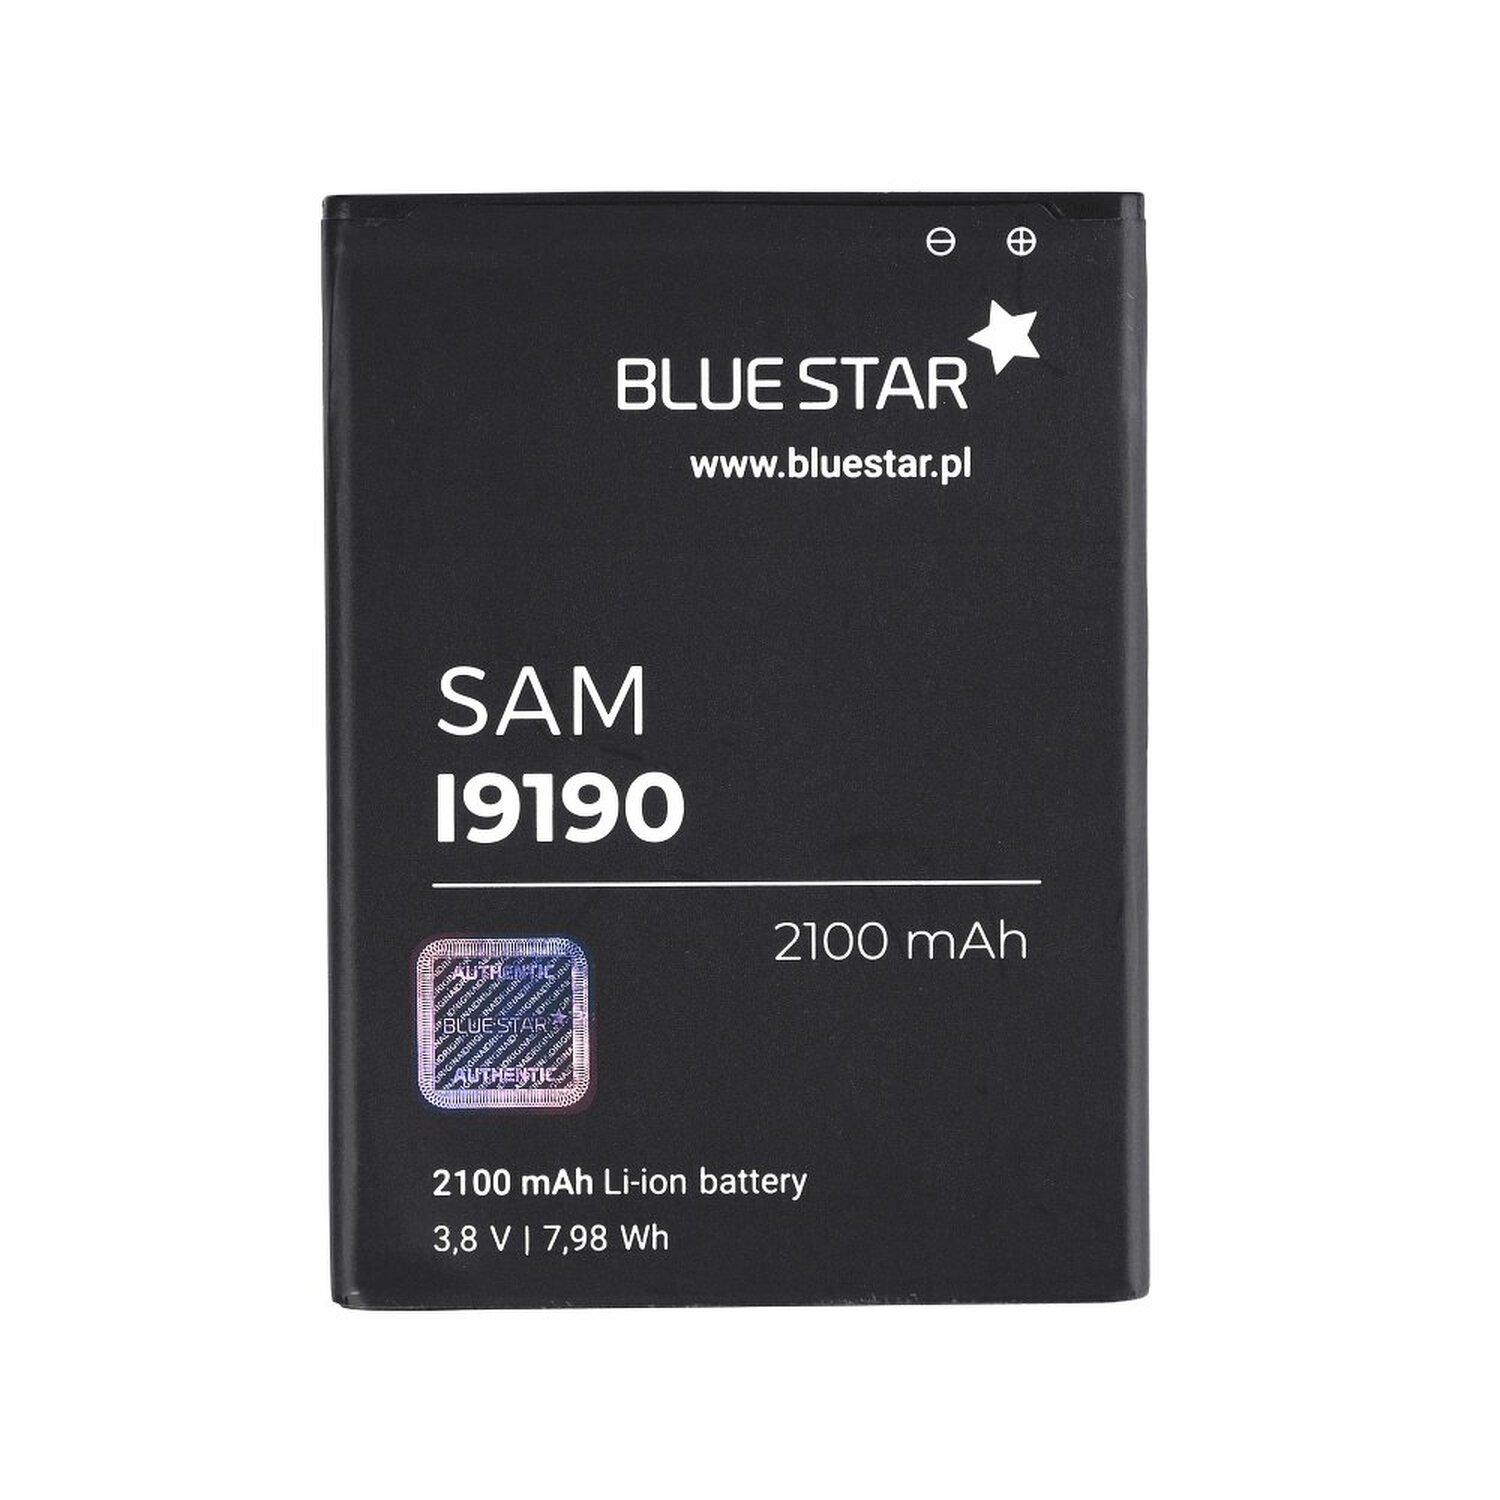 BLUESTAR Akku Handyakku Li-Ion Samsung für S4 Mini Galaxy